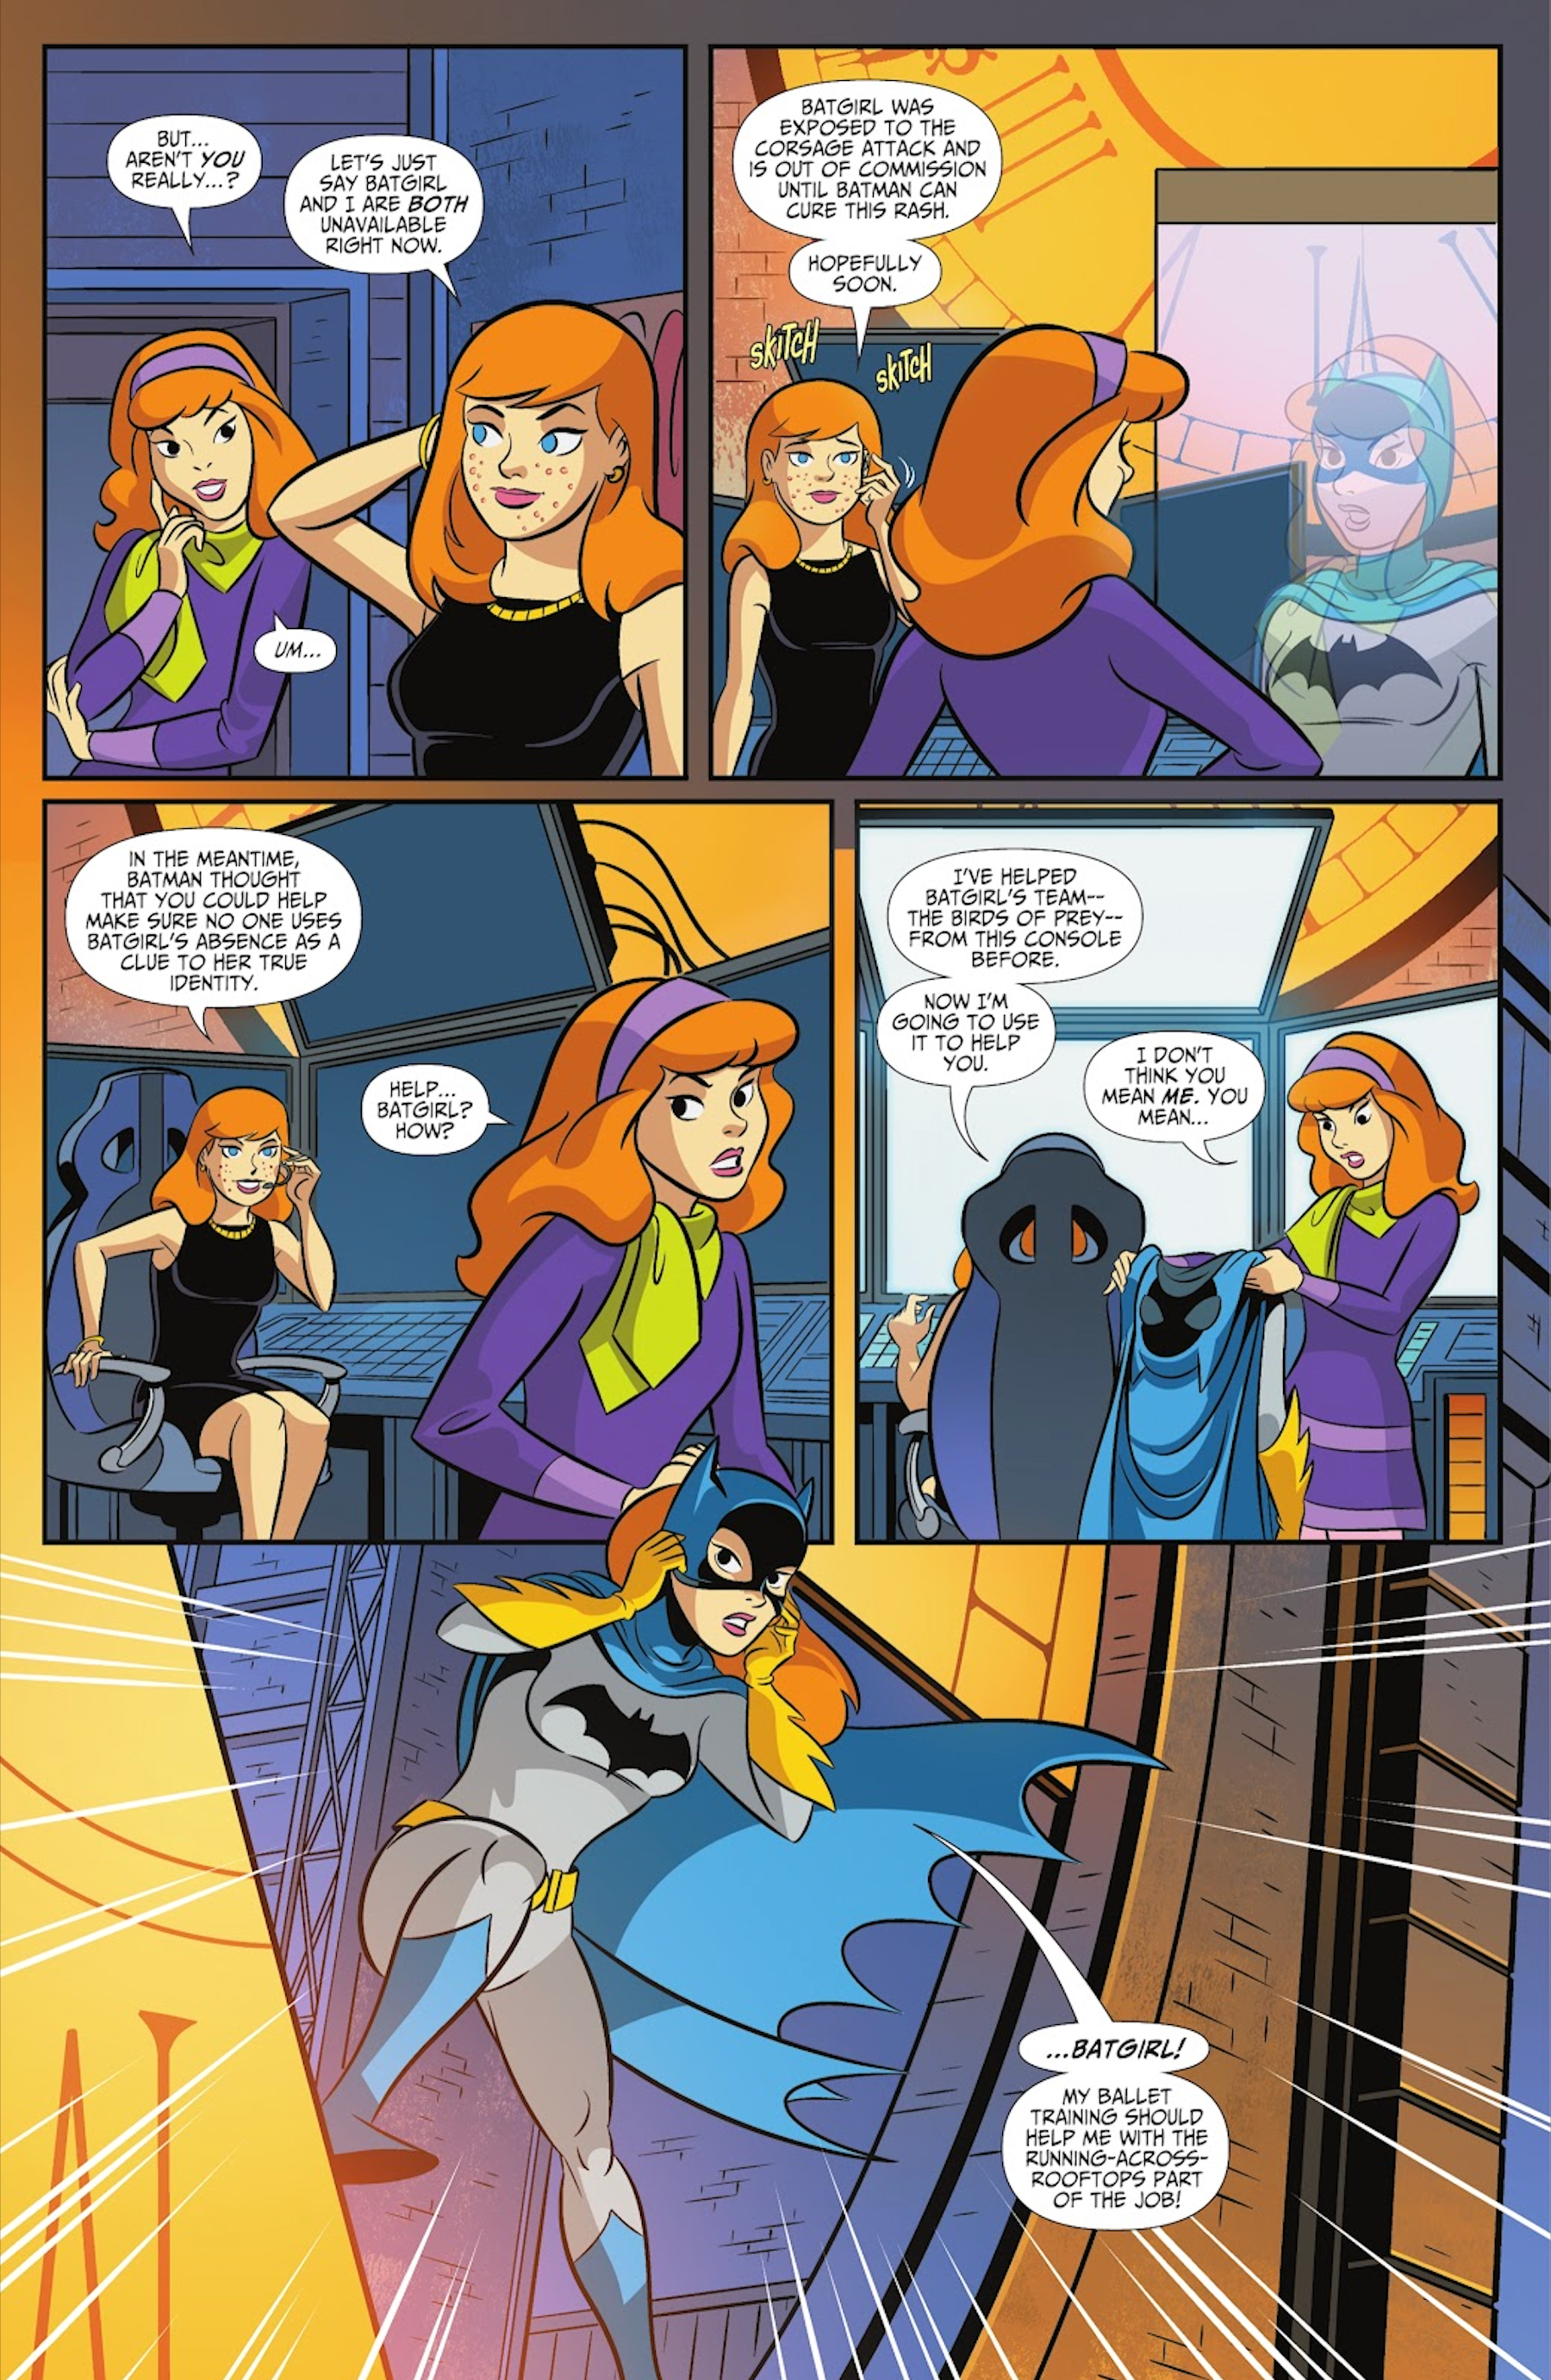 Daphne becomes Batgirl